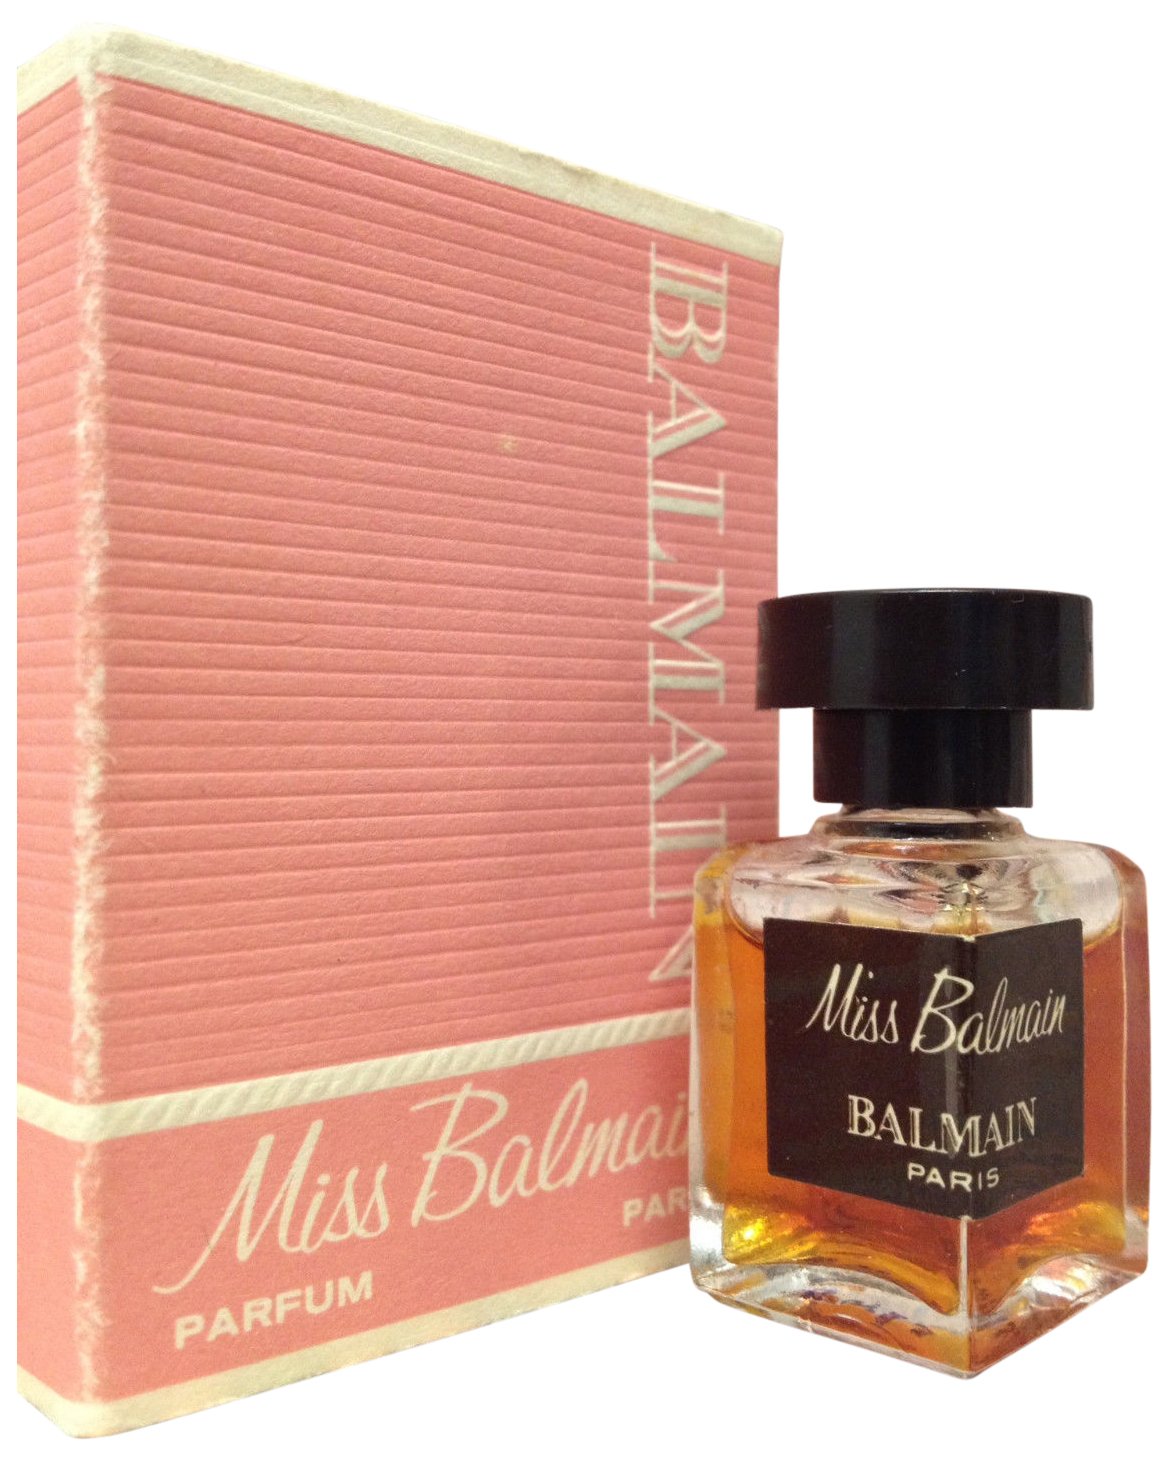 Miss balmain perfume